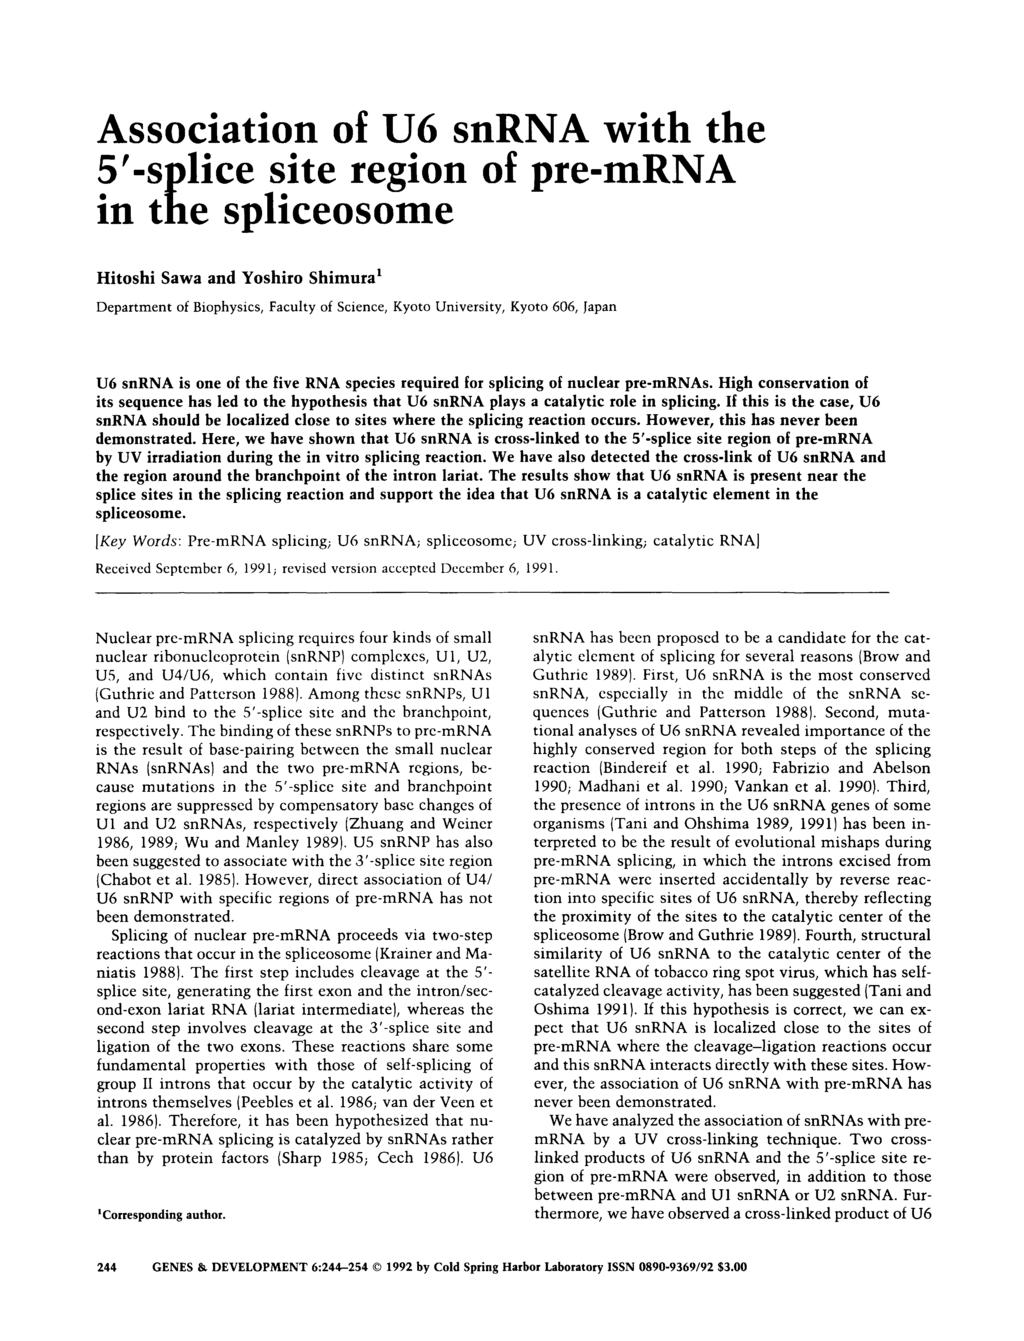 Association of U6 snrna with the 5'-splice site region of pre-mrna in the spliceosome Hitoshi Sawa and Yoshiro Shimura^ Department of Biophysics, Faculty of Science, Kyoto University, Kyoto 606,